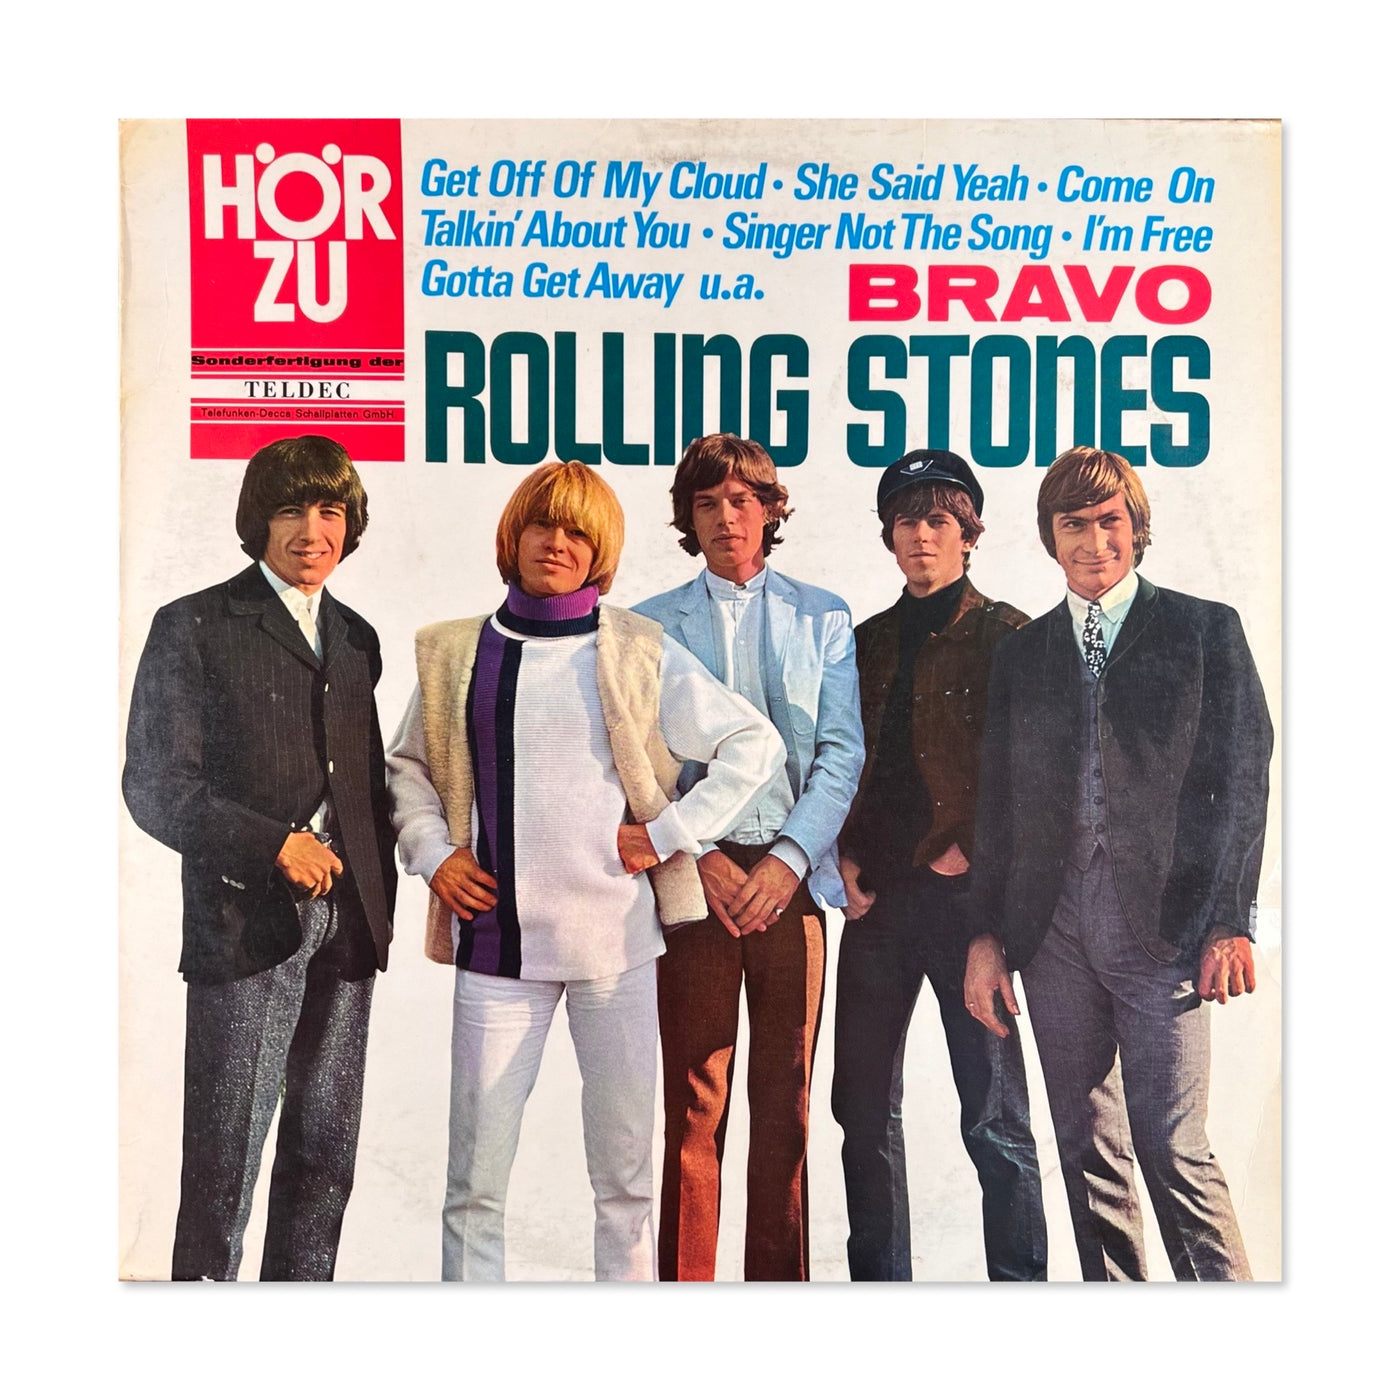 The Rolling Stones - Bravo